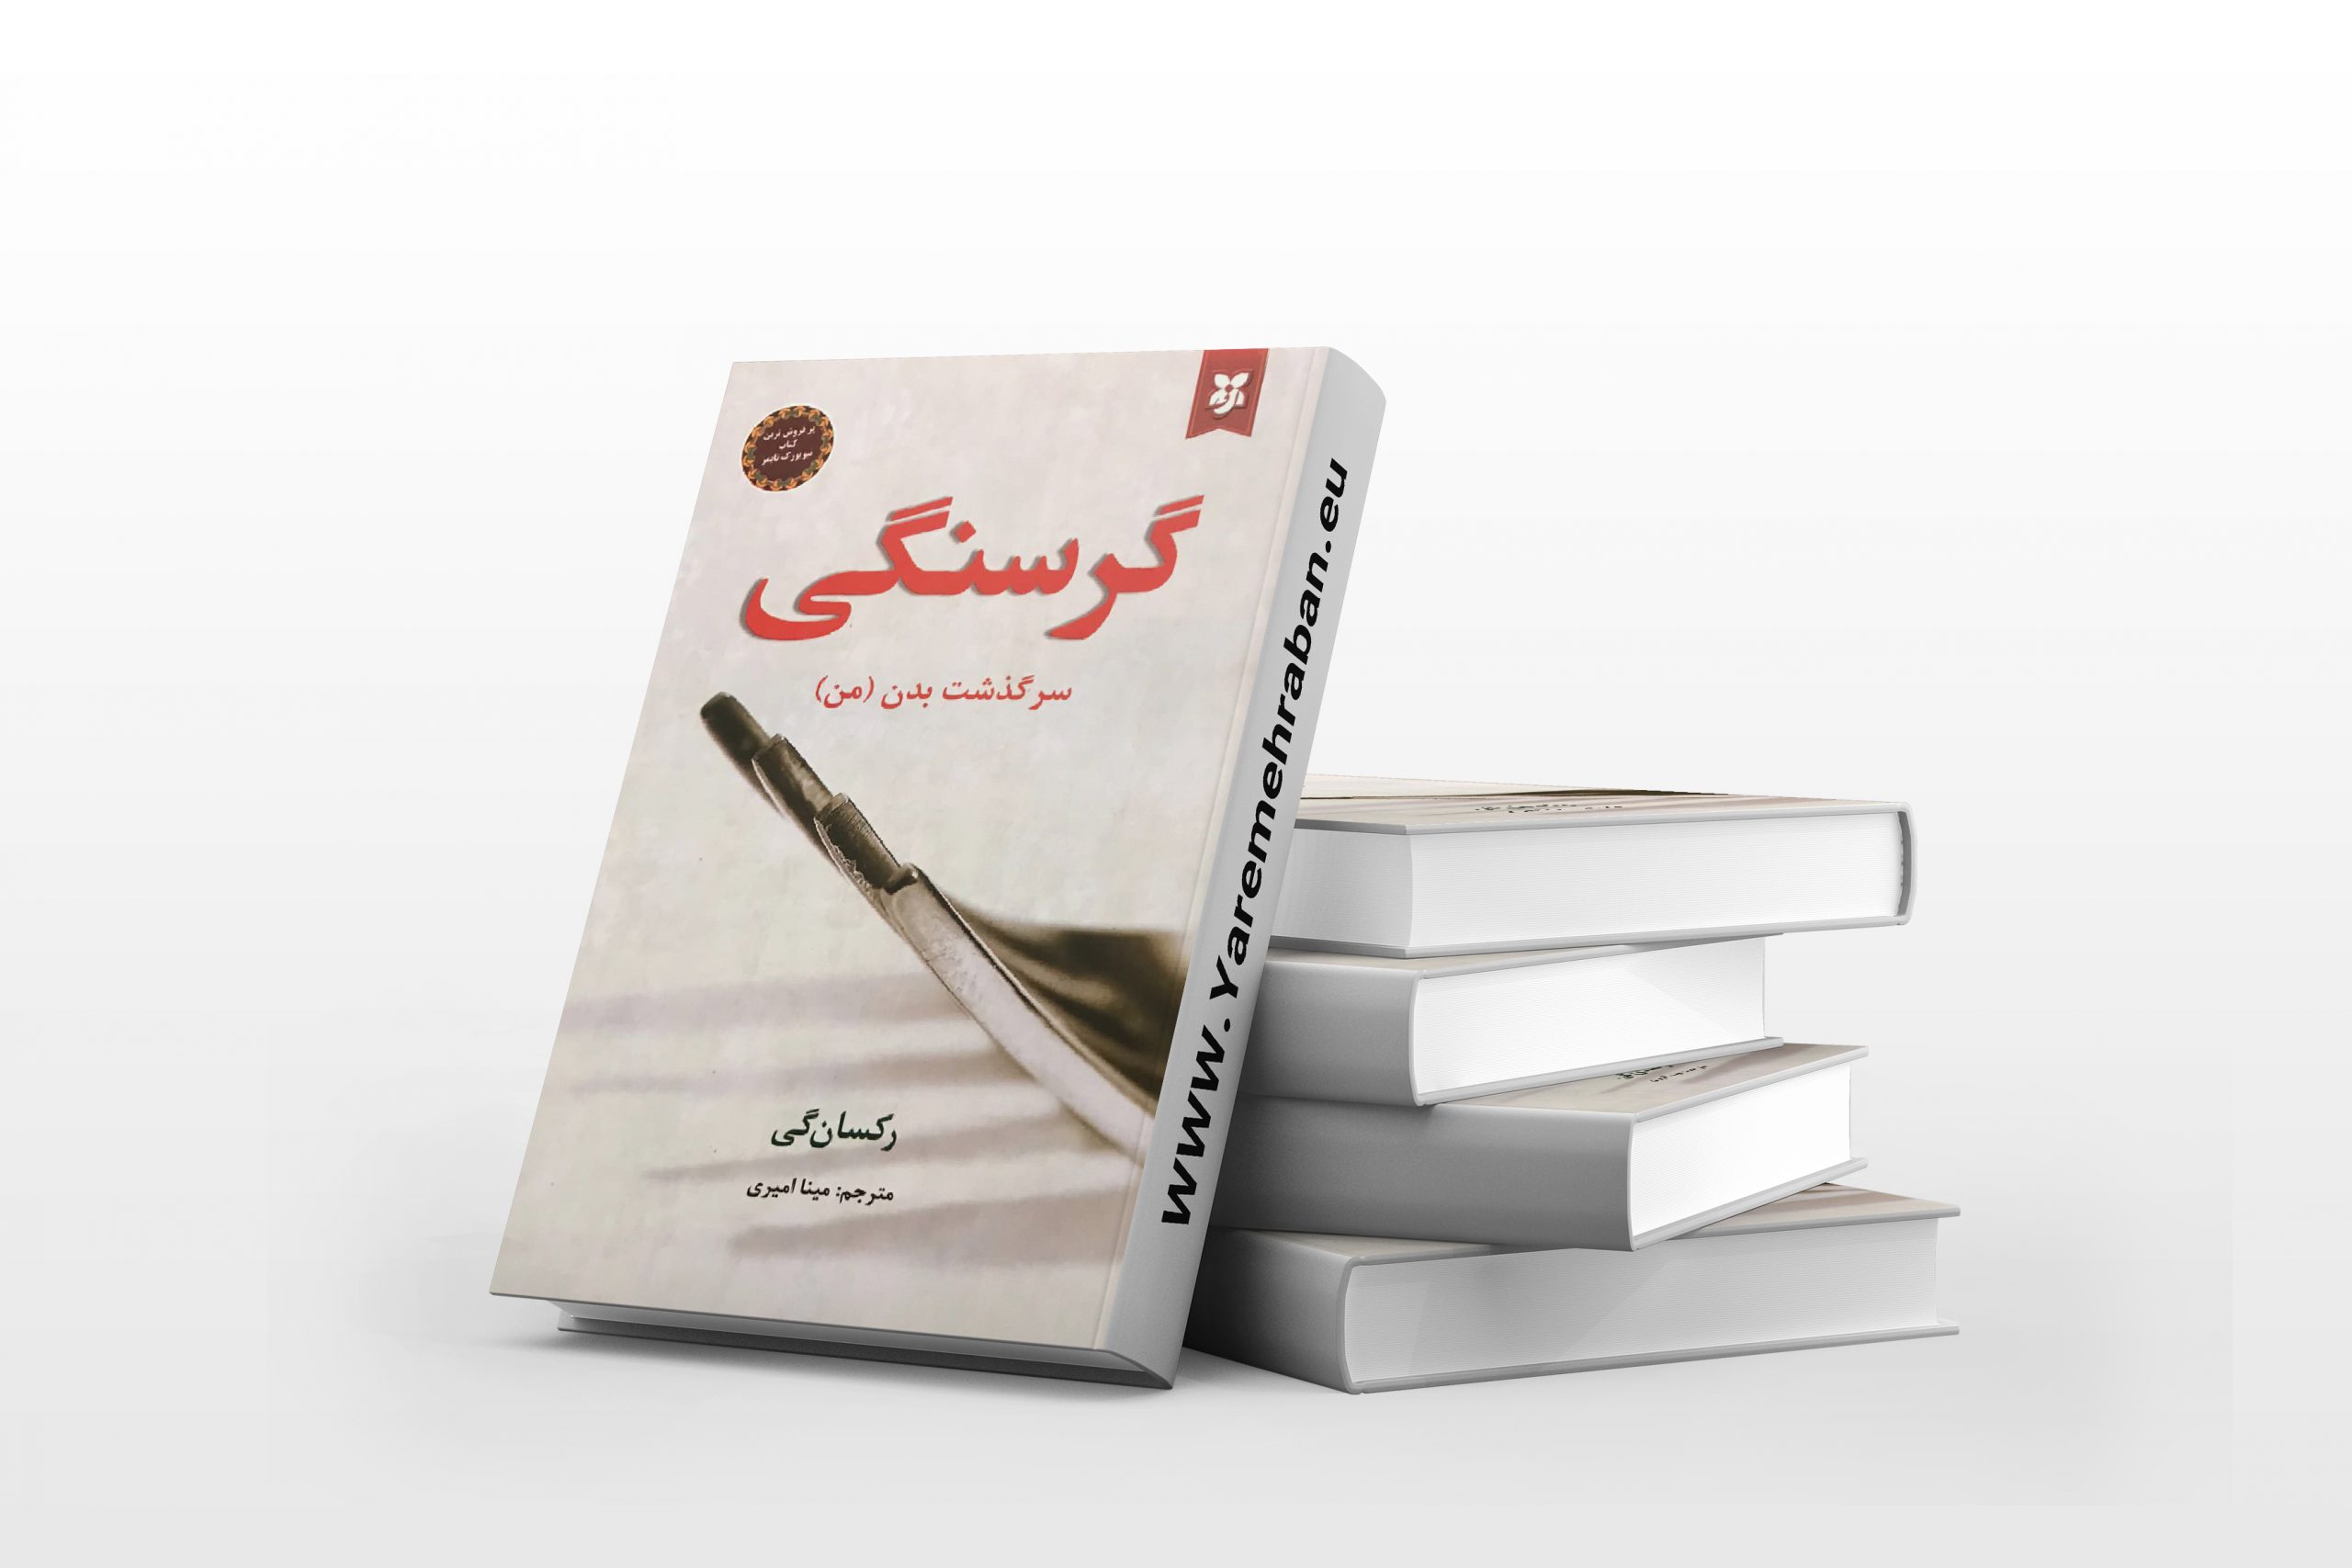 Memoir　Body　(My)　of　bookstore　Hunger.　in　Mehraban　A　Yare　Persian